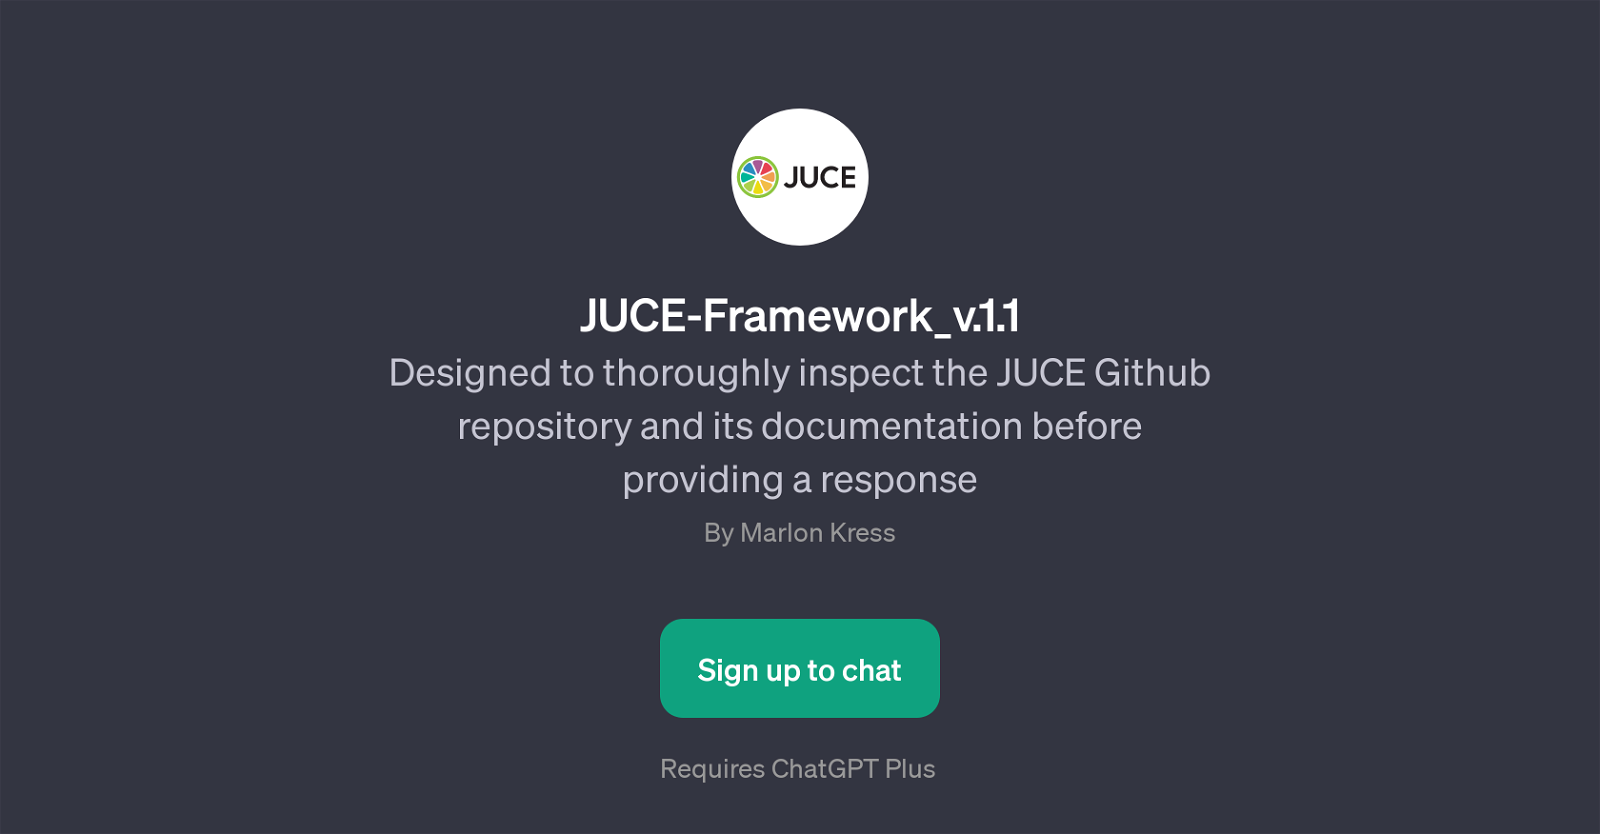 JUCE-Framework_v.1.1 website